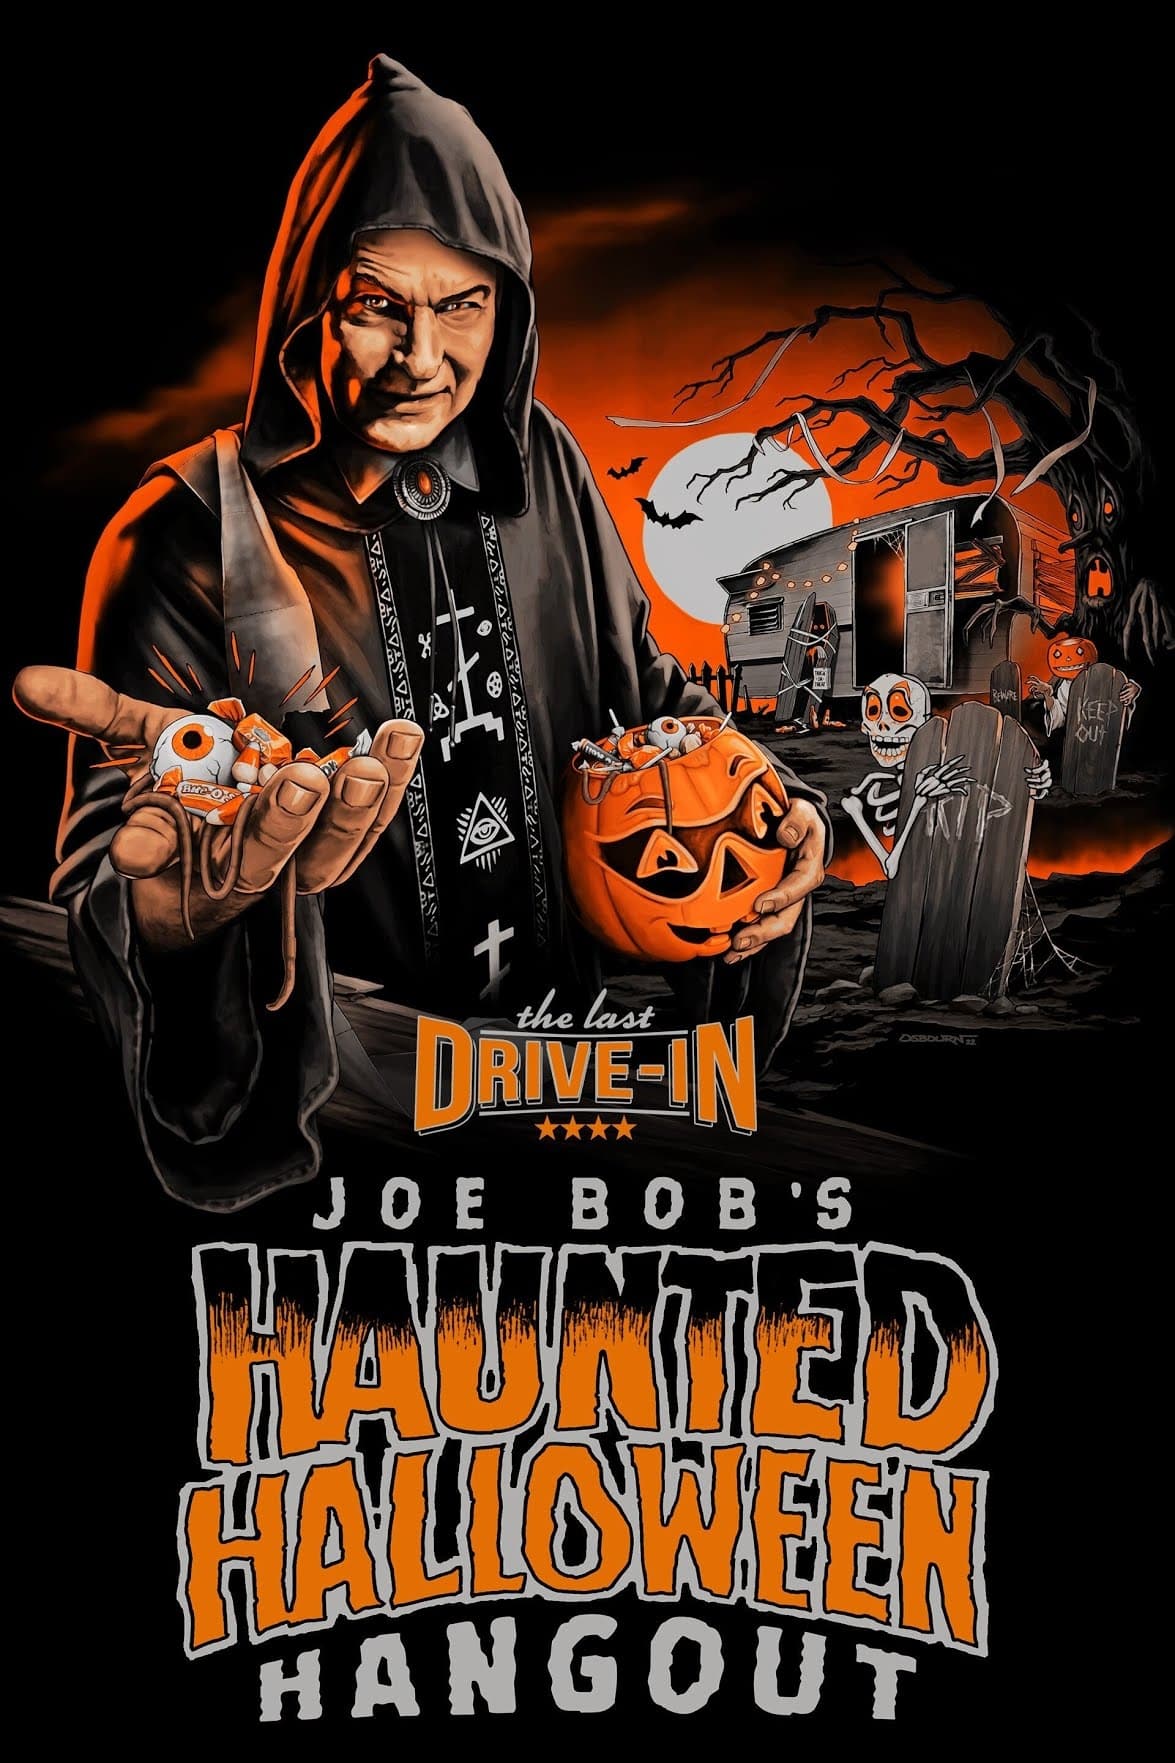 Joe Bob's Haunted Halloween Hangout